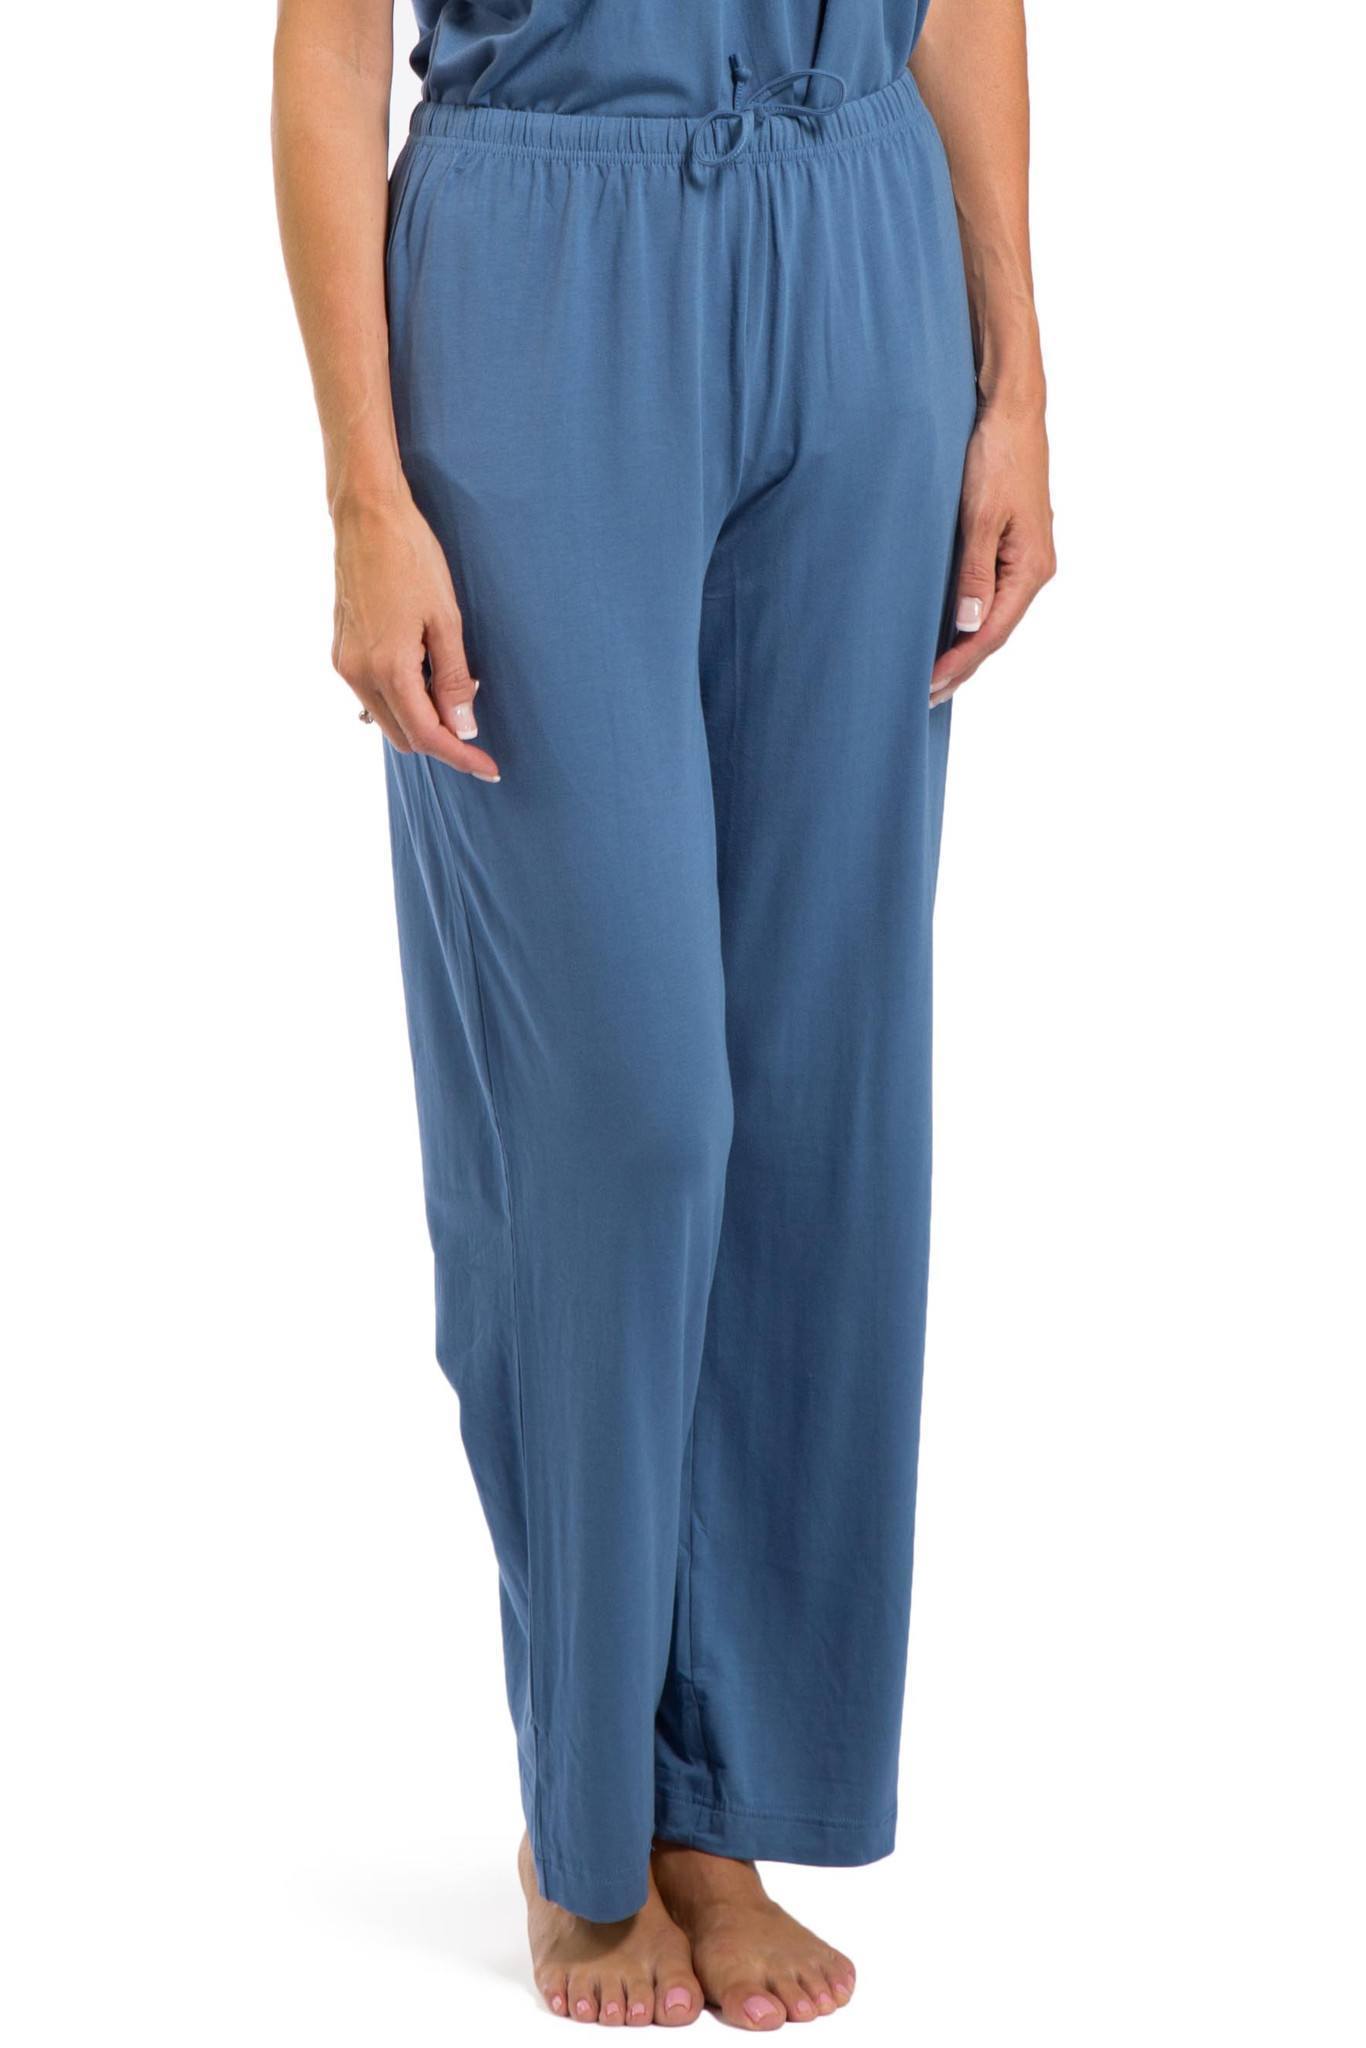 Women's Pajamas | Organic Cotton V-Neck Pajama Set | Fishers Finery